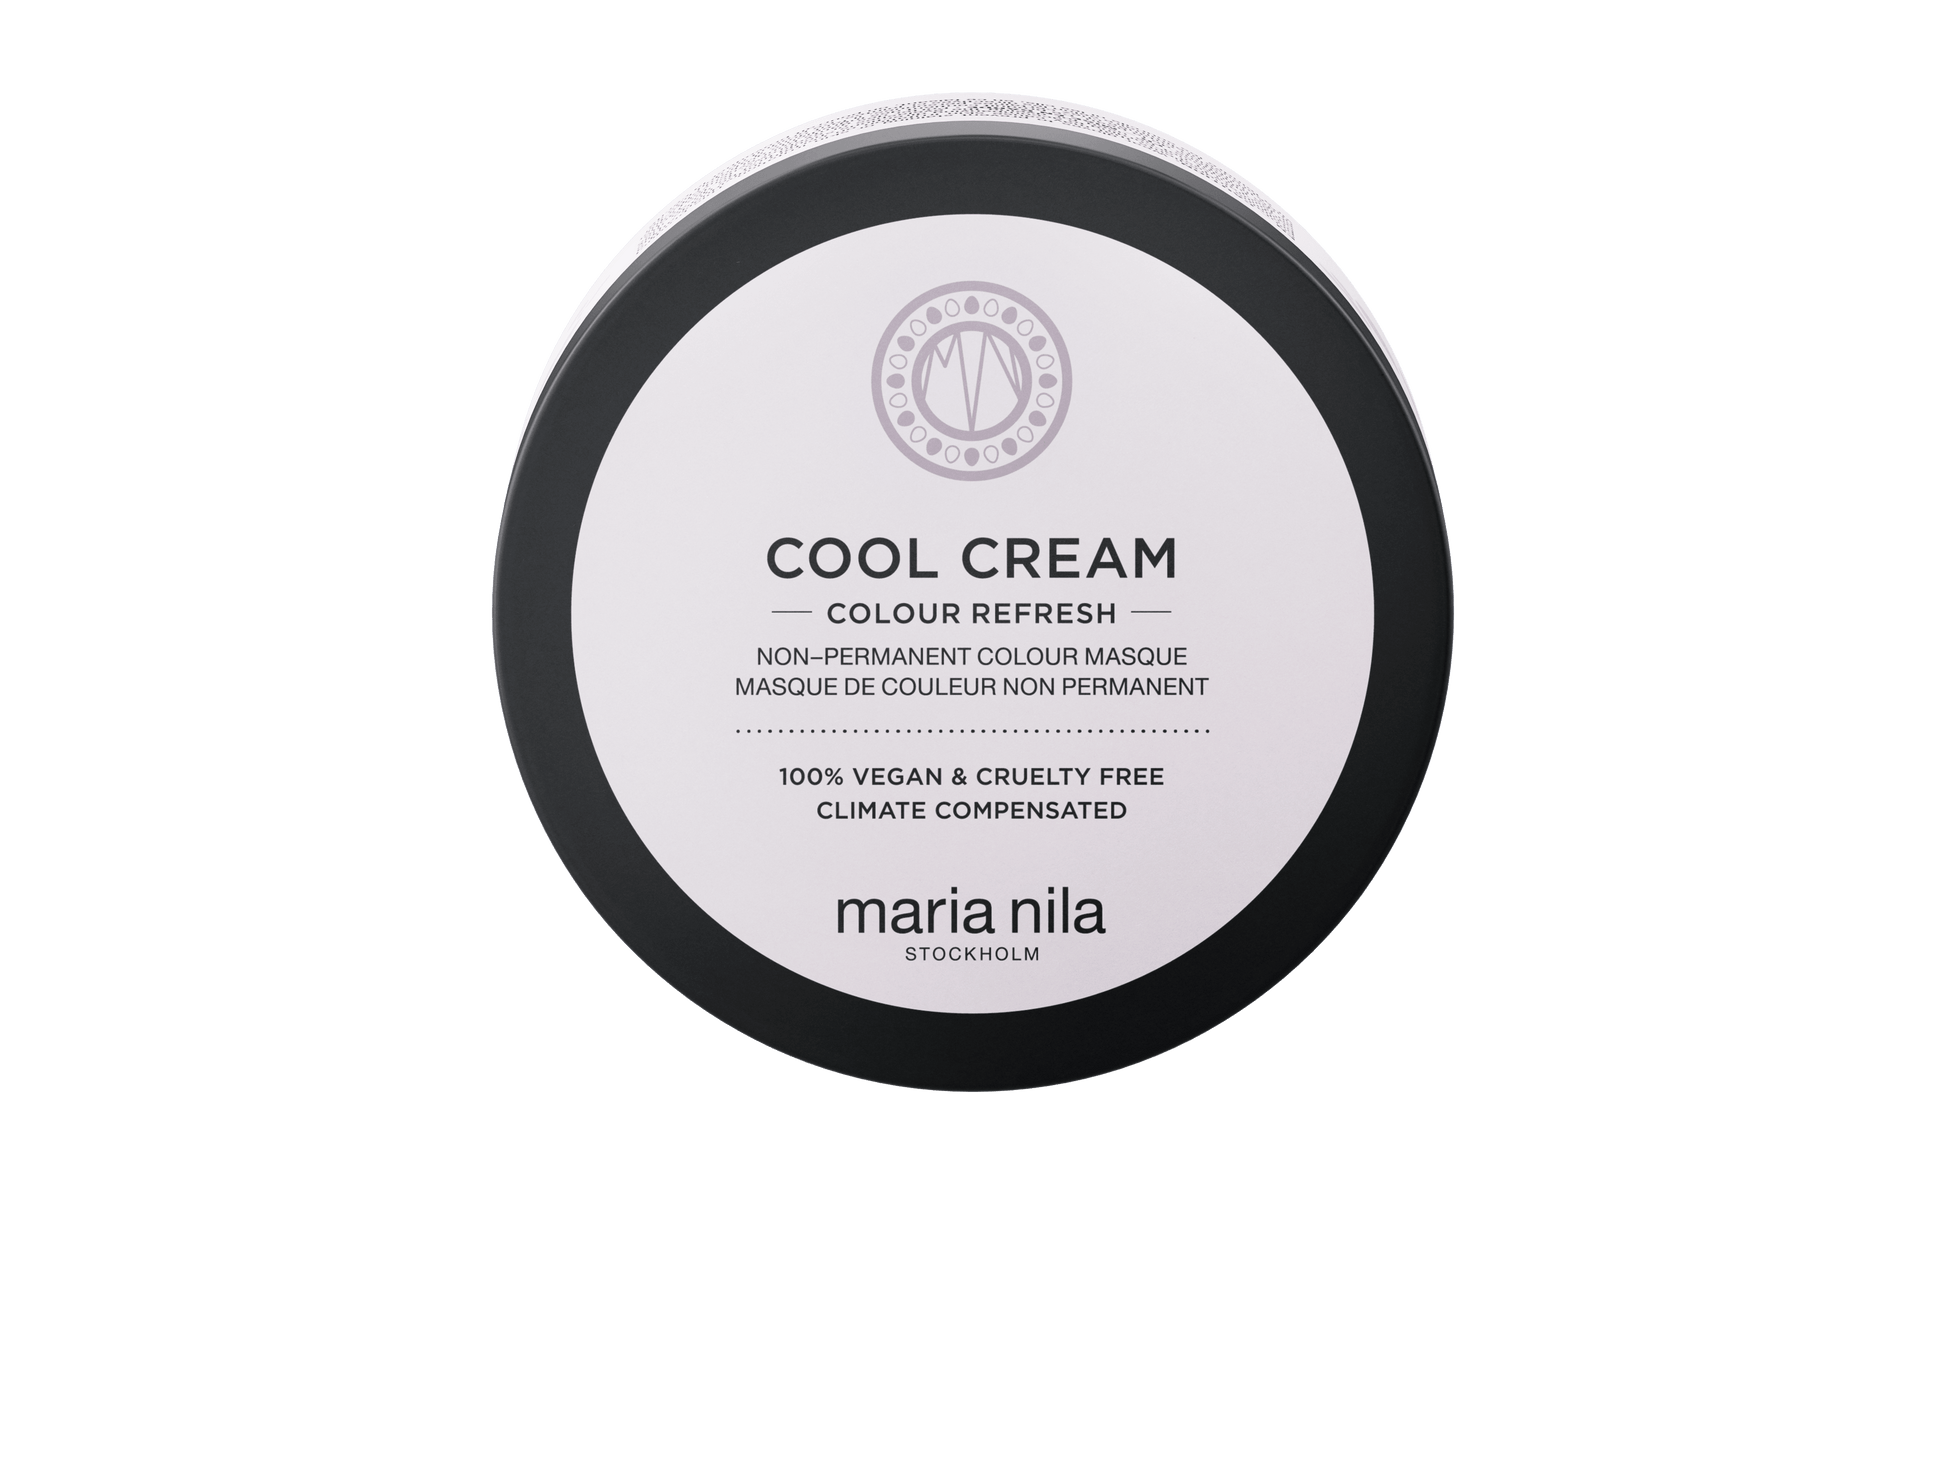 Colour Refresh Cool Cream - The Coloroom 